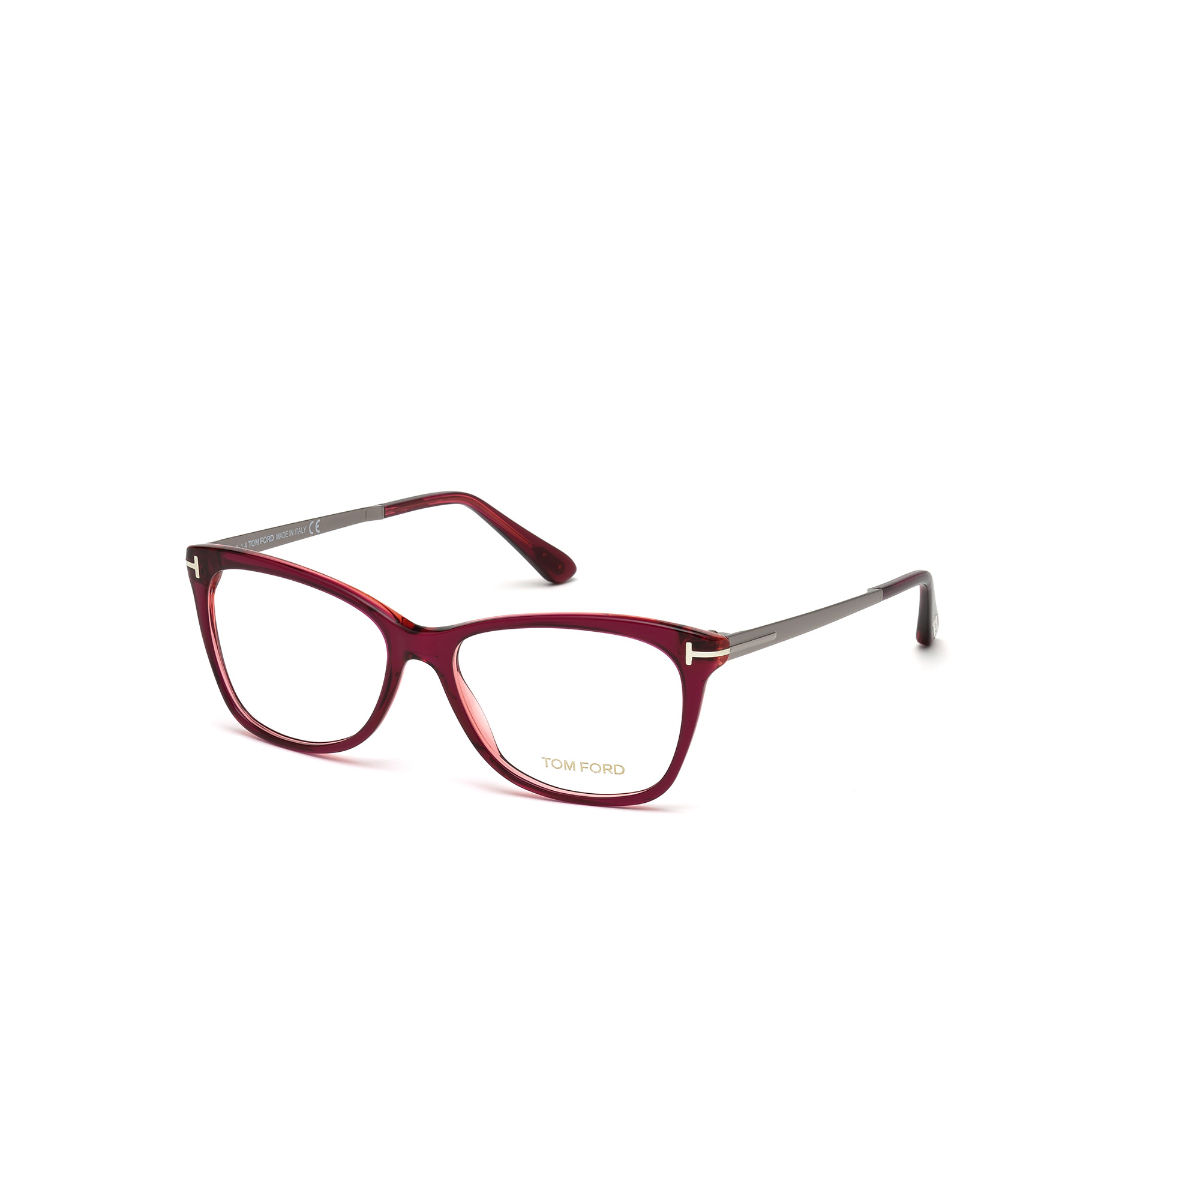 Tom Ford Eyewear Purple Plastic Frames FT5353 52 075